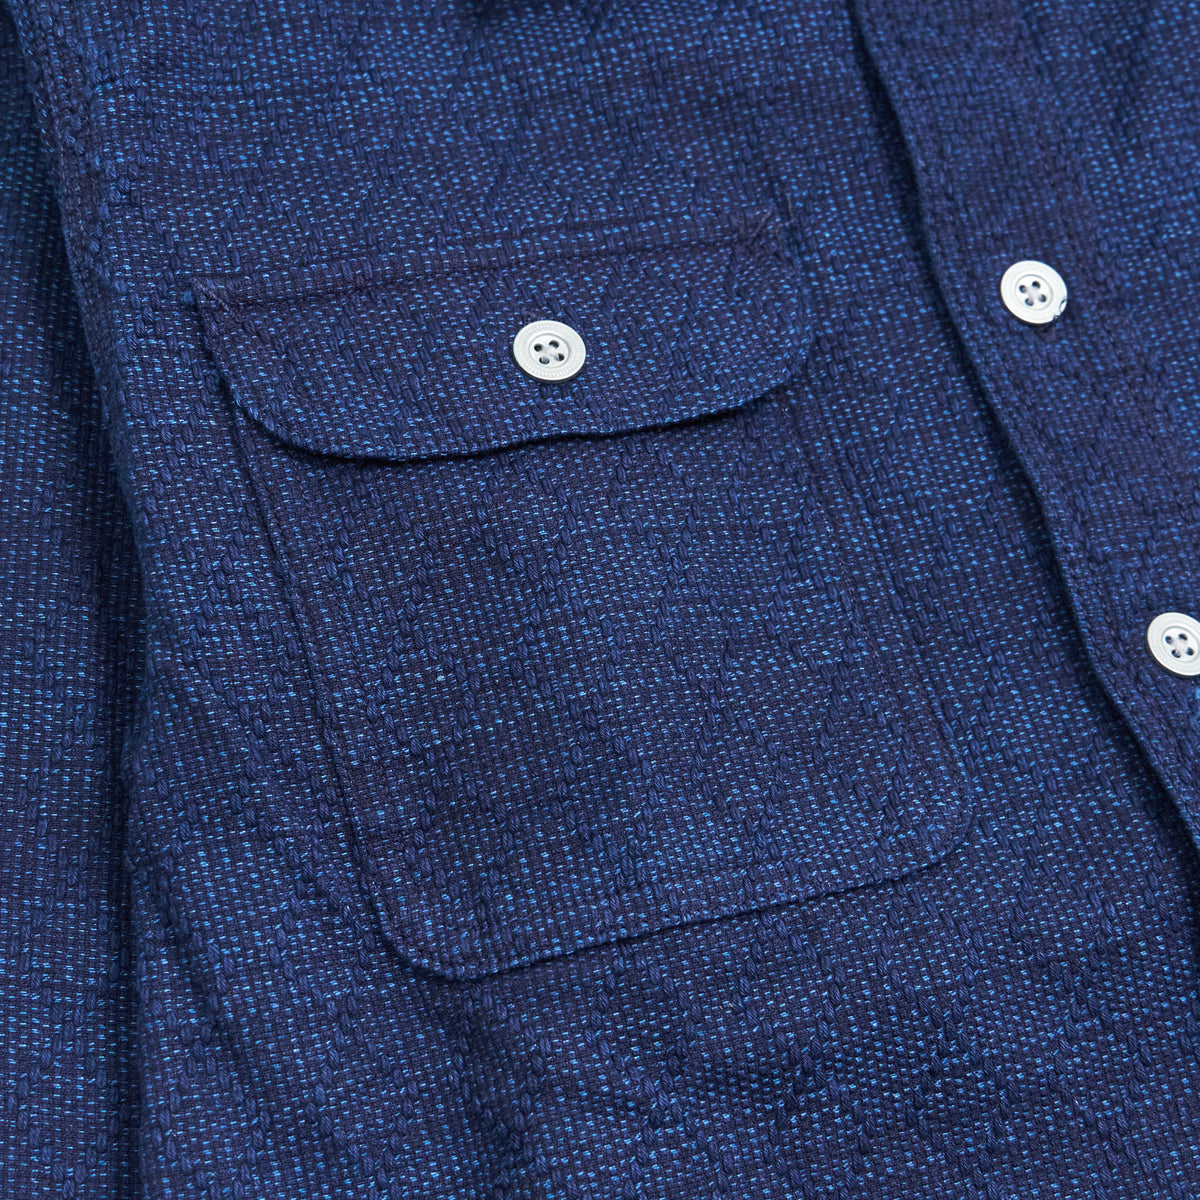 Samurai Jeans Indigo Cotton Overshirt